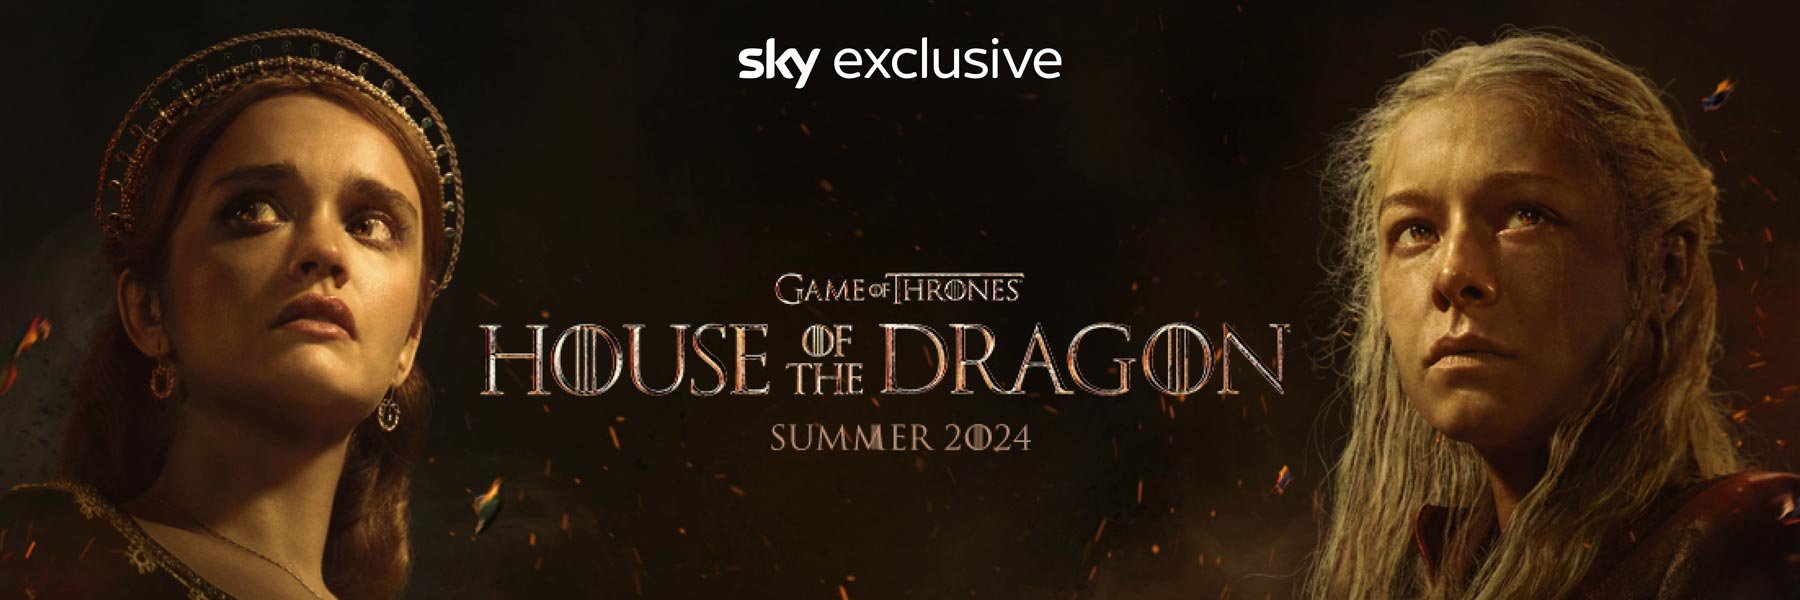 House of The Dragon - Staff|el 2 | Sky X